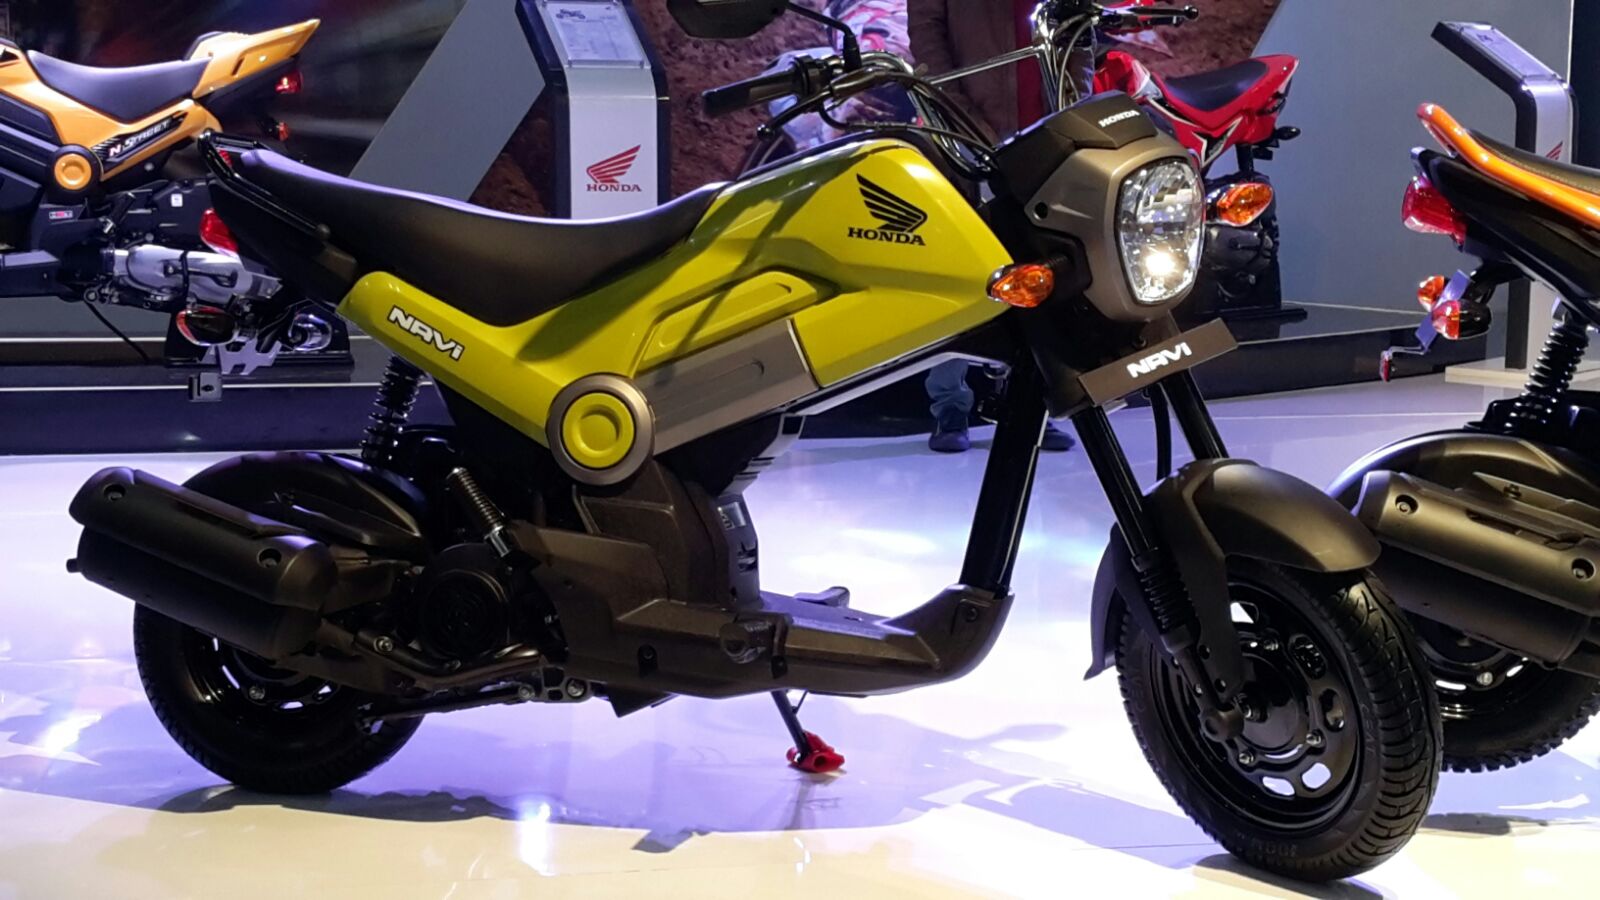 Honda Bikes At Auto Expo 2016 Honda Bikes In Delhi Auto Expo